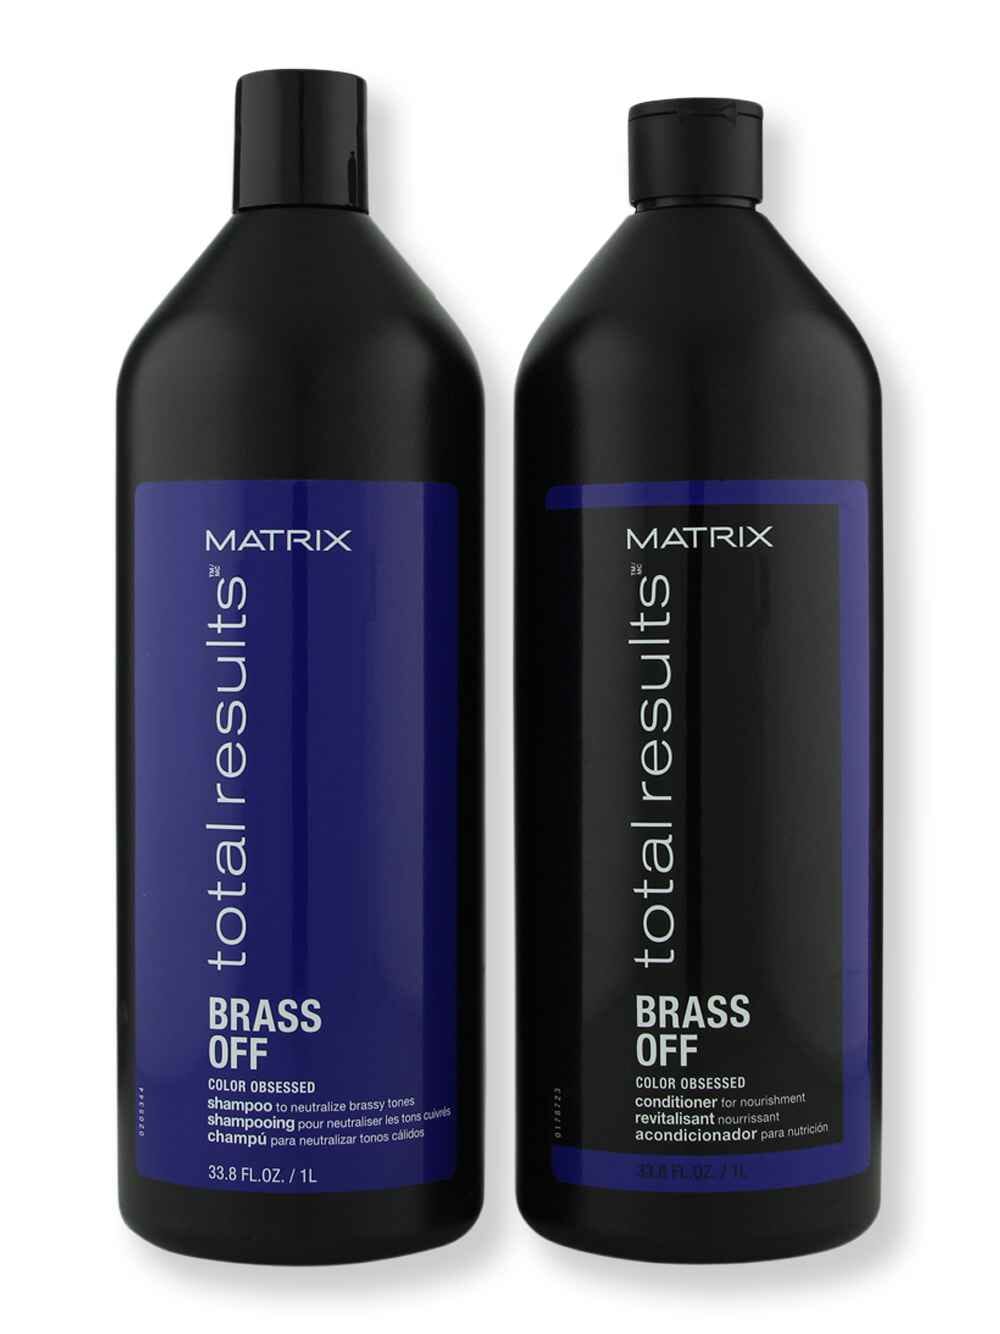 Matrix Matrix Total Results Brass Off Shampoo & Conditioner Liter Hair Care Value Sets 